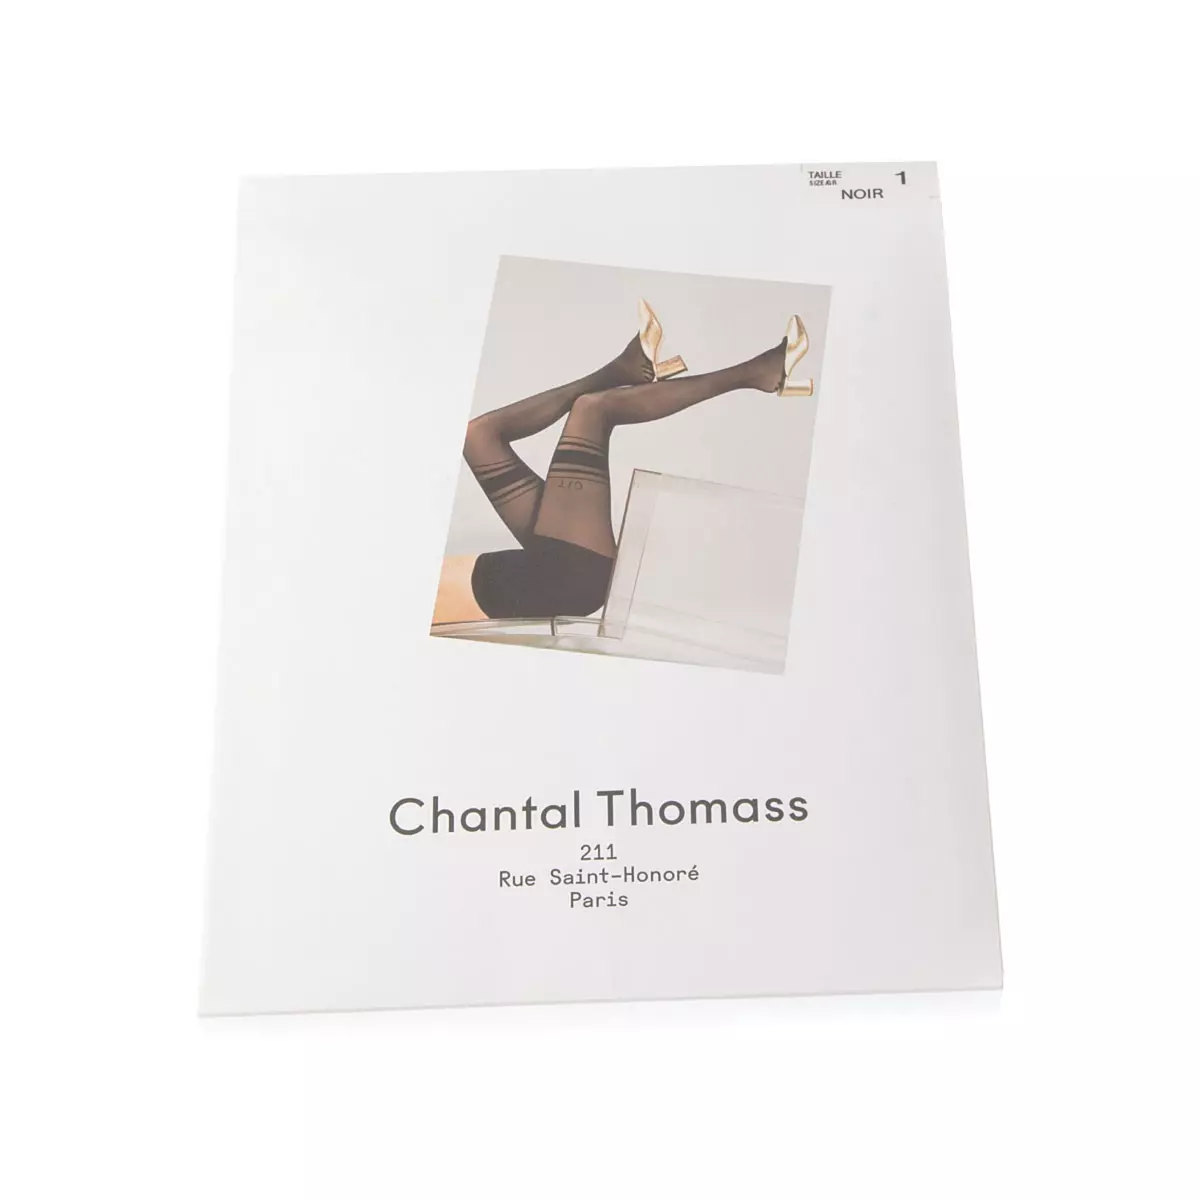 CHANTAL THOMASS Collant fin - 1 paire - Sexy - Transparent - Clair - Sans couture - Gousset polyamide - Rayures